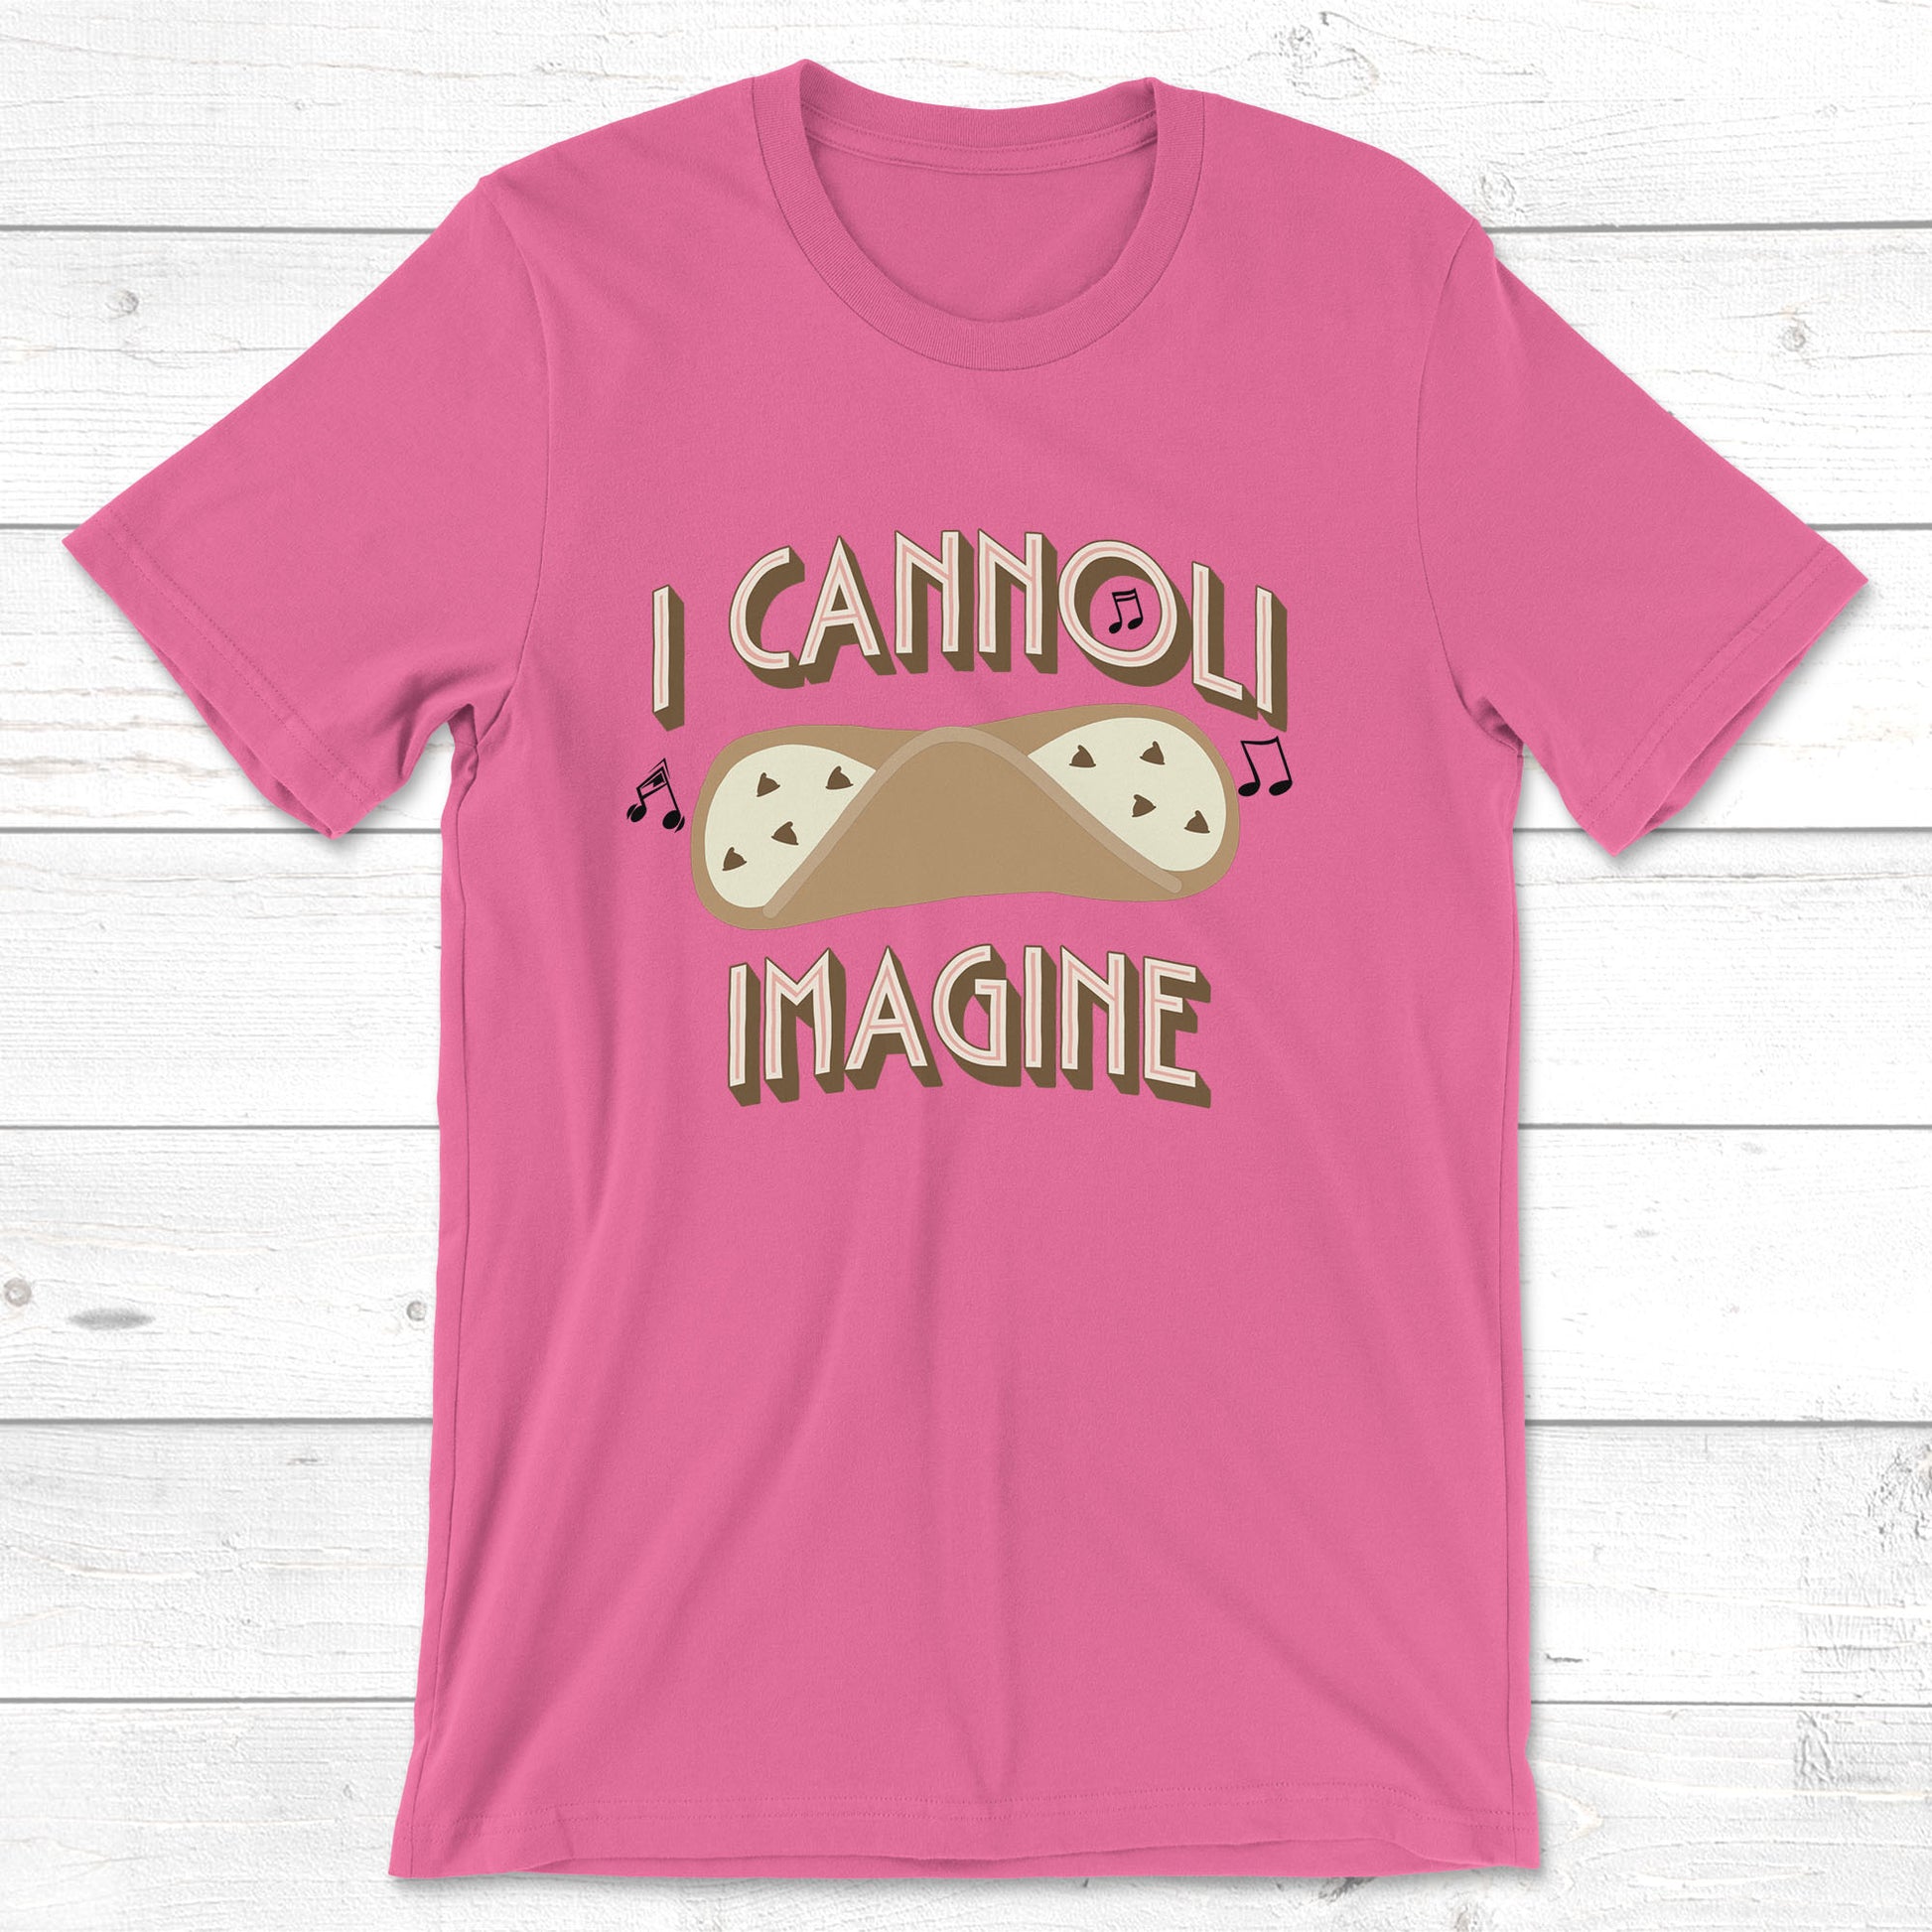 I Cannoli Imagine in Charity Pink